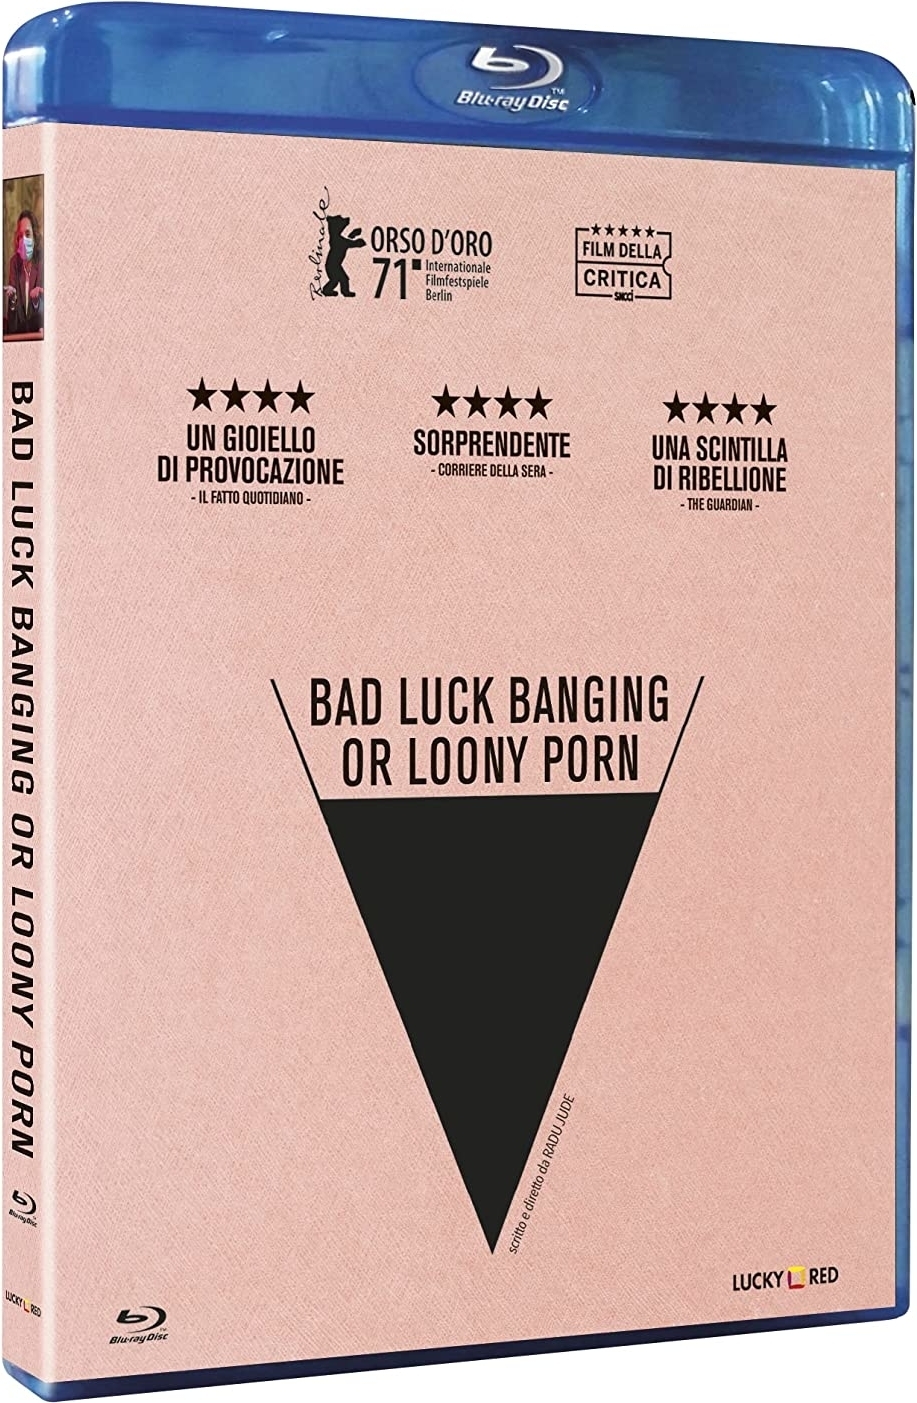 Sony Loony - Bad Luck Banging or Loony Porn Blu-ray (Babardeala cu bucluc sau porno  balamuc) (Italy)